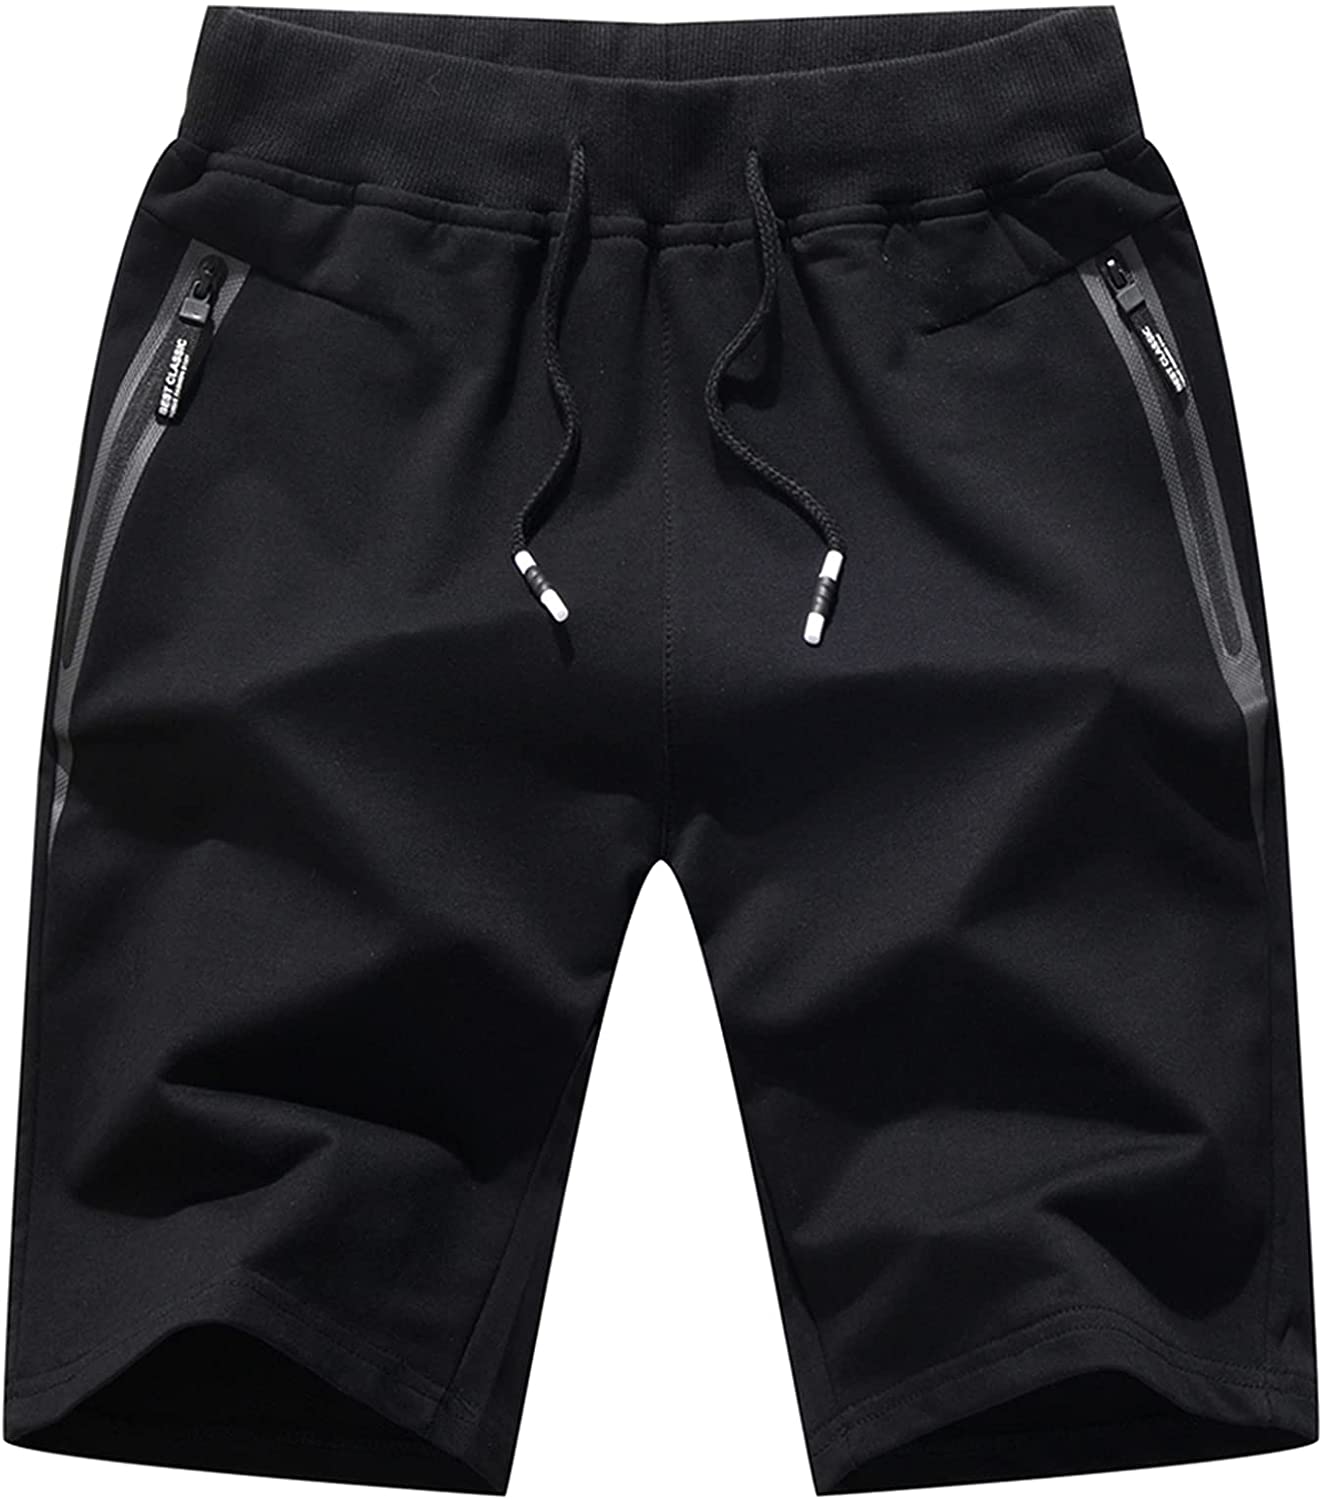 JustSun Mens Shorts Casual Sports Joggers Shorts with Elastic Waist Zipper Pockets